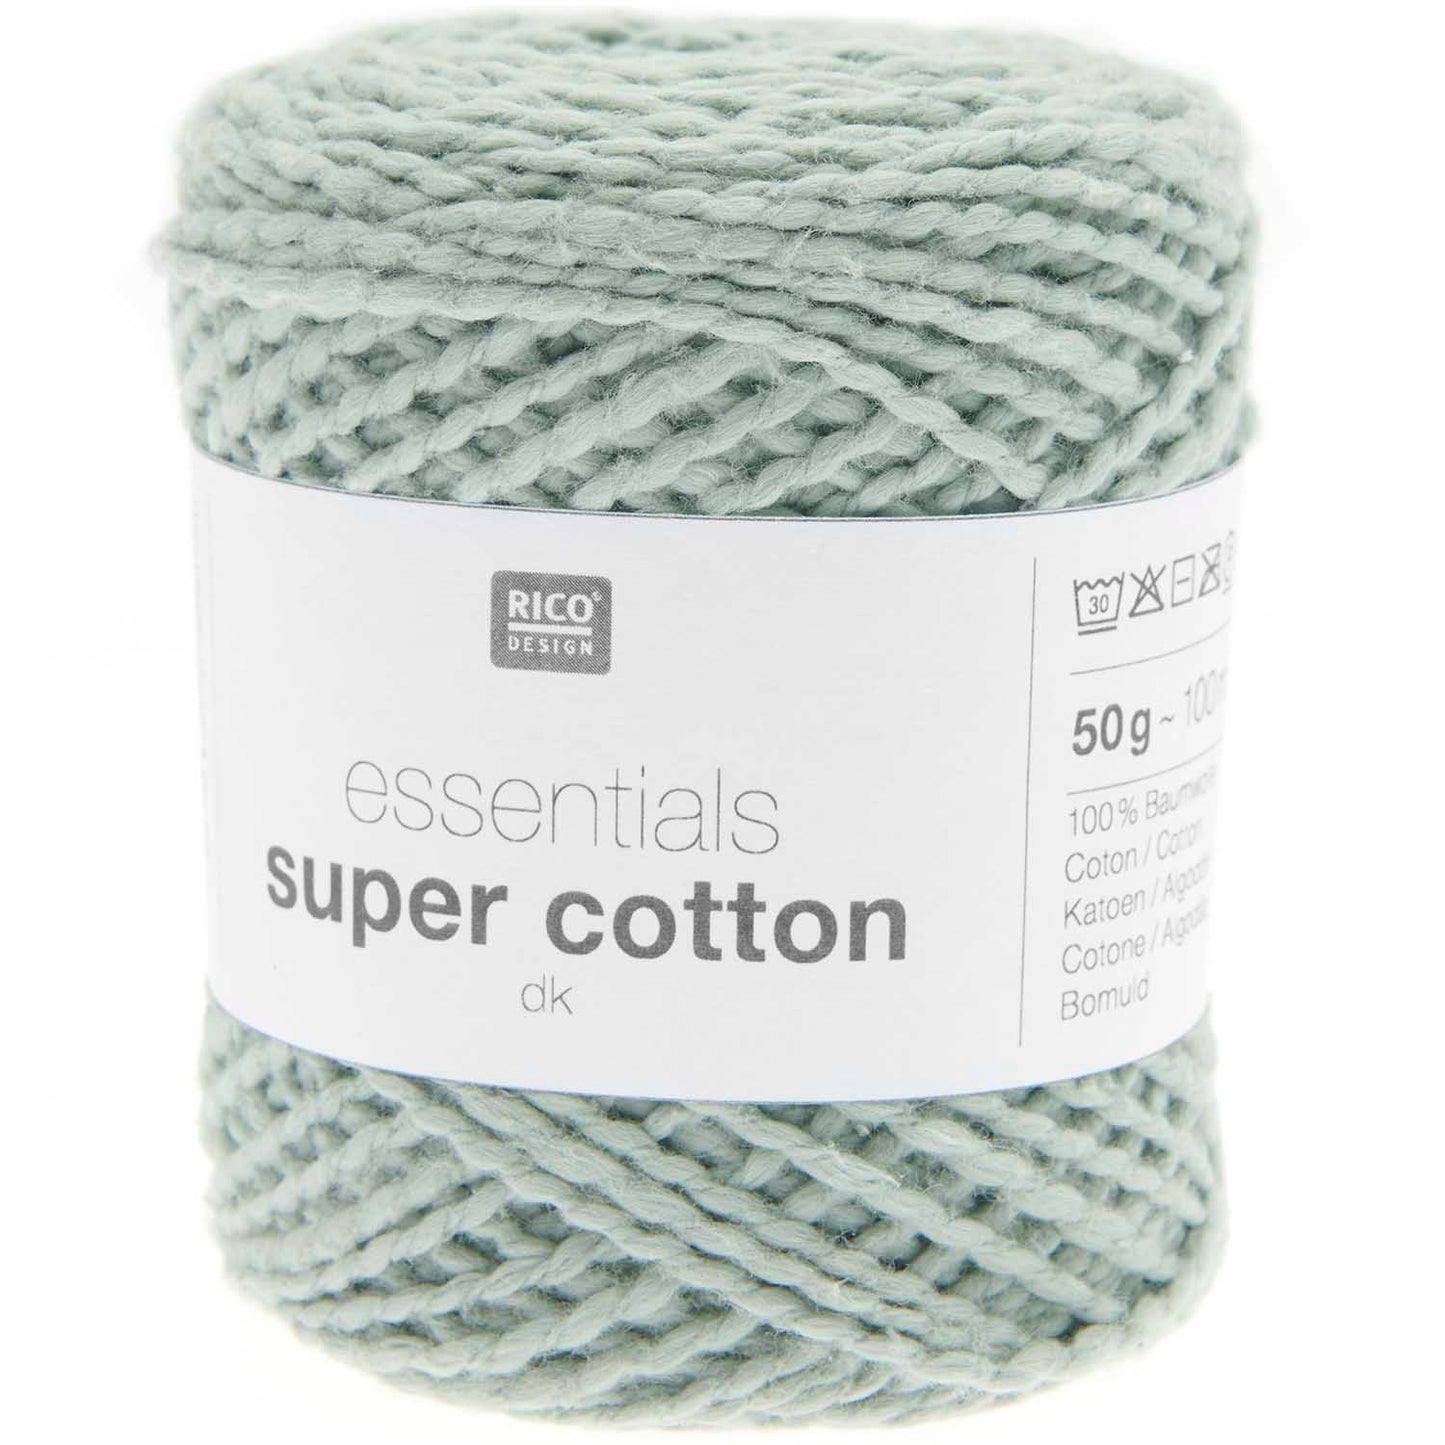 Rico Design Essentials Super Cotton DK